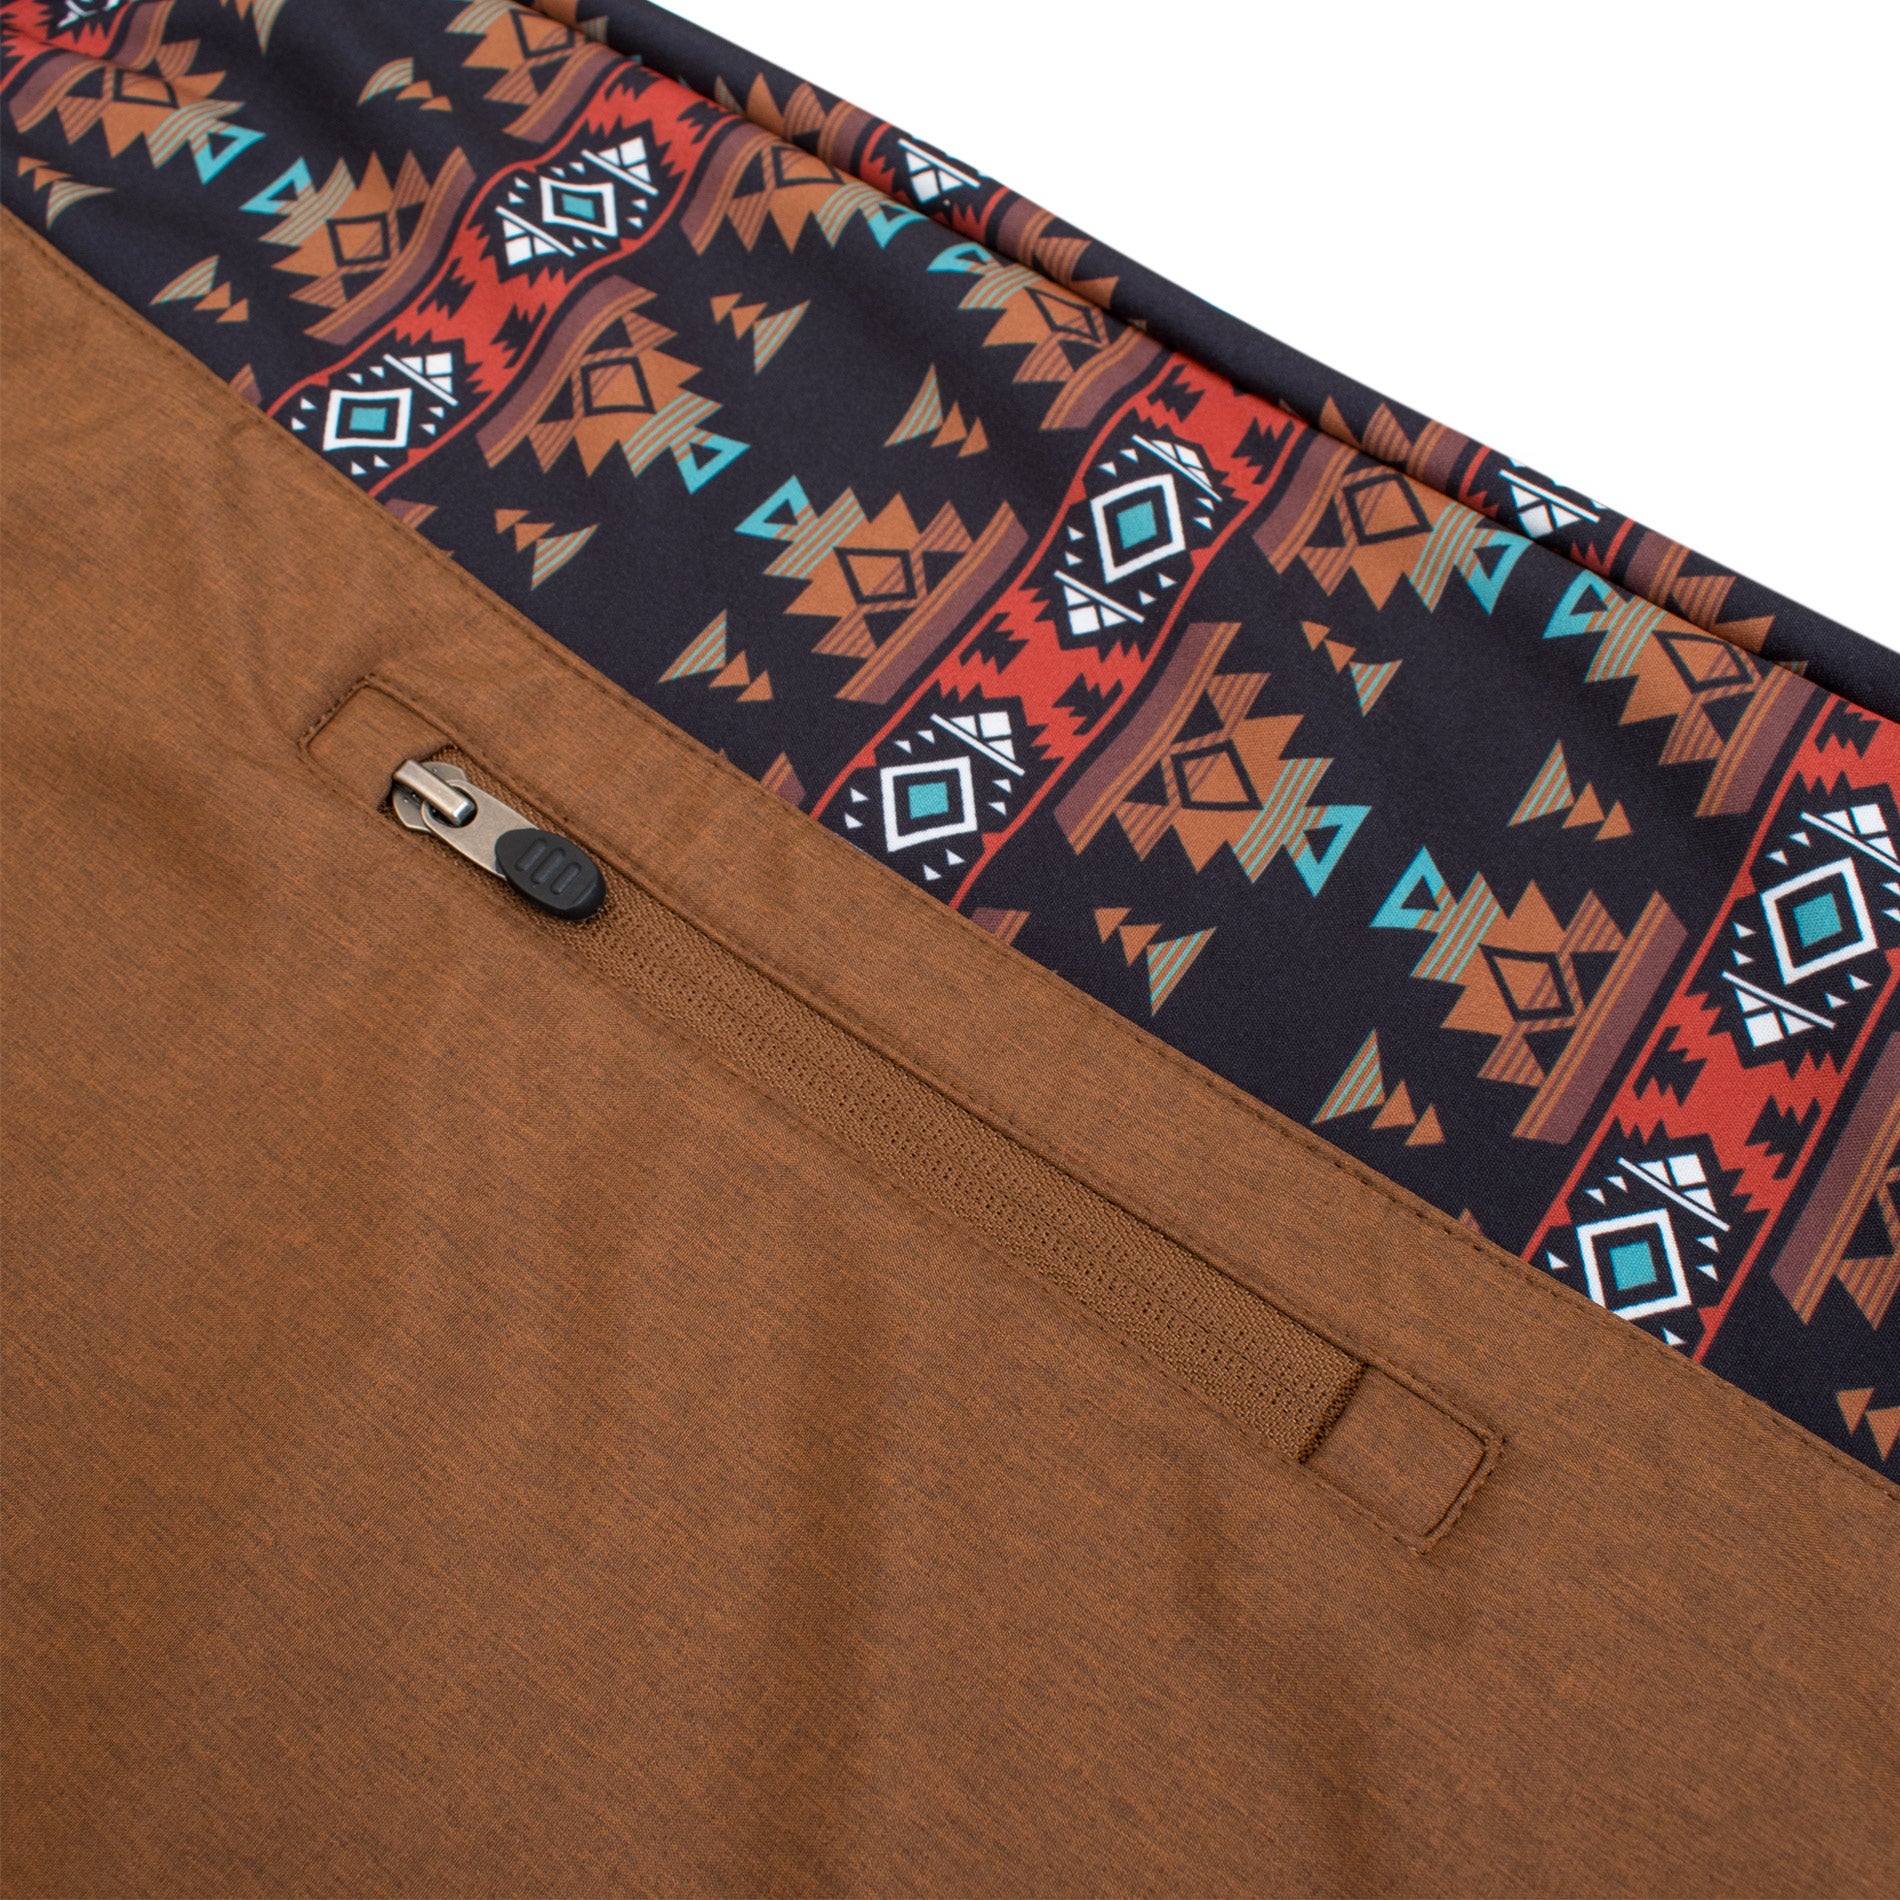 Men's Soft Shell Bonded Jacket With Western Aztec Print -NJ650EMB-AZ-COGNAC-RUST